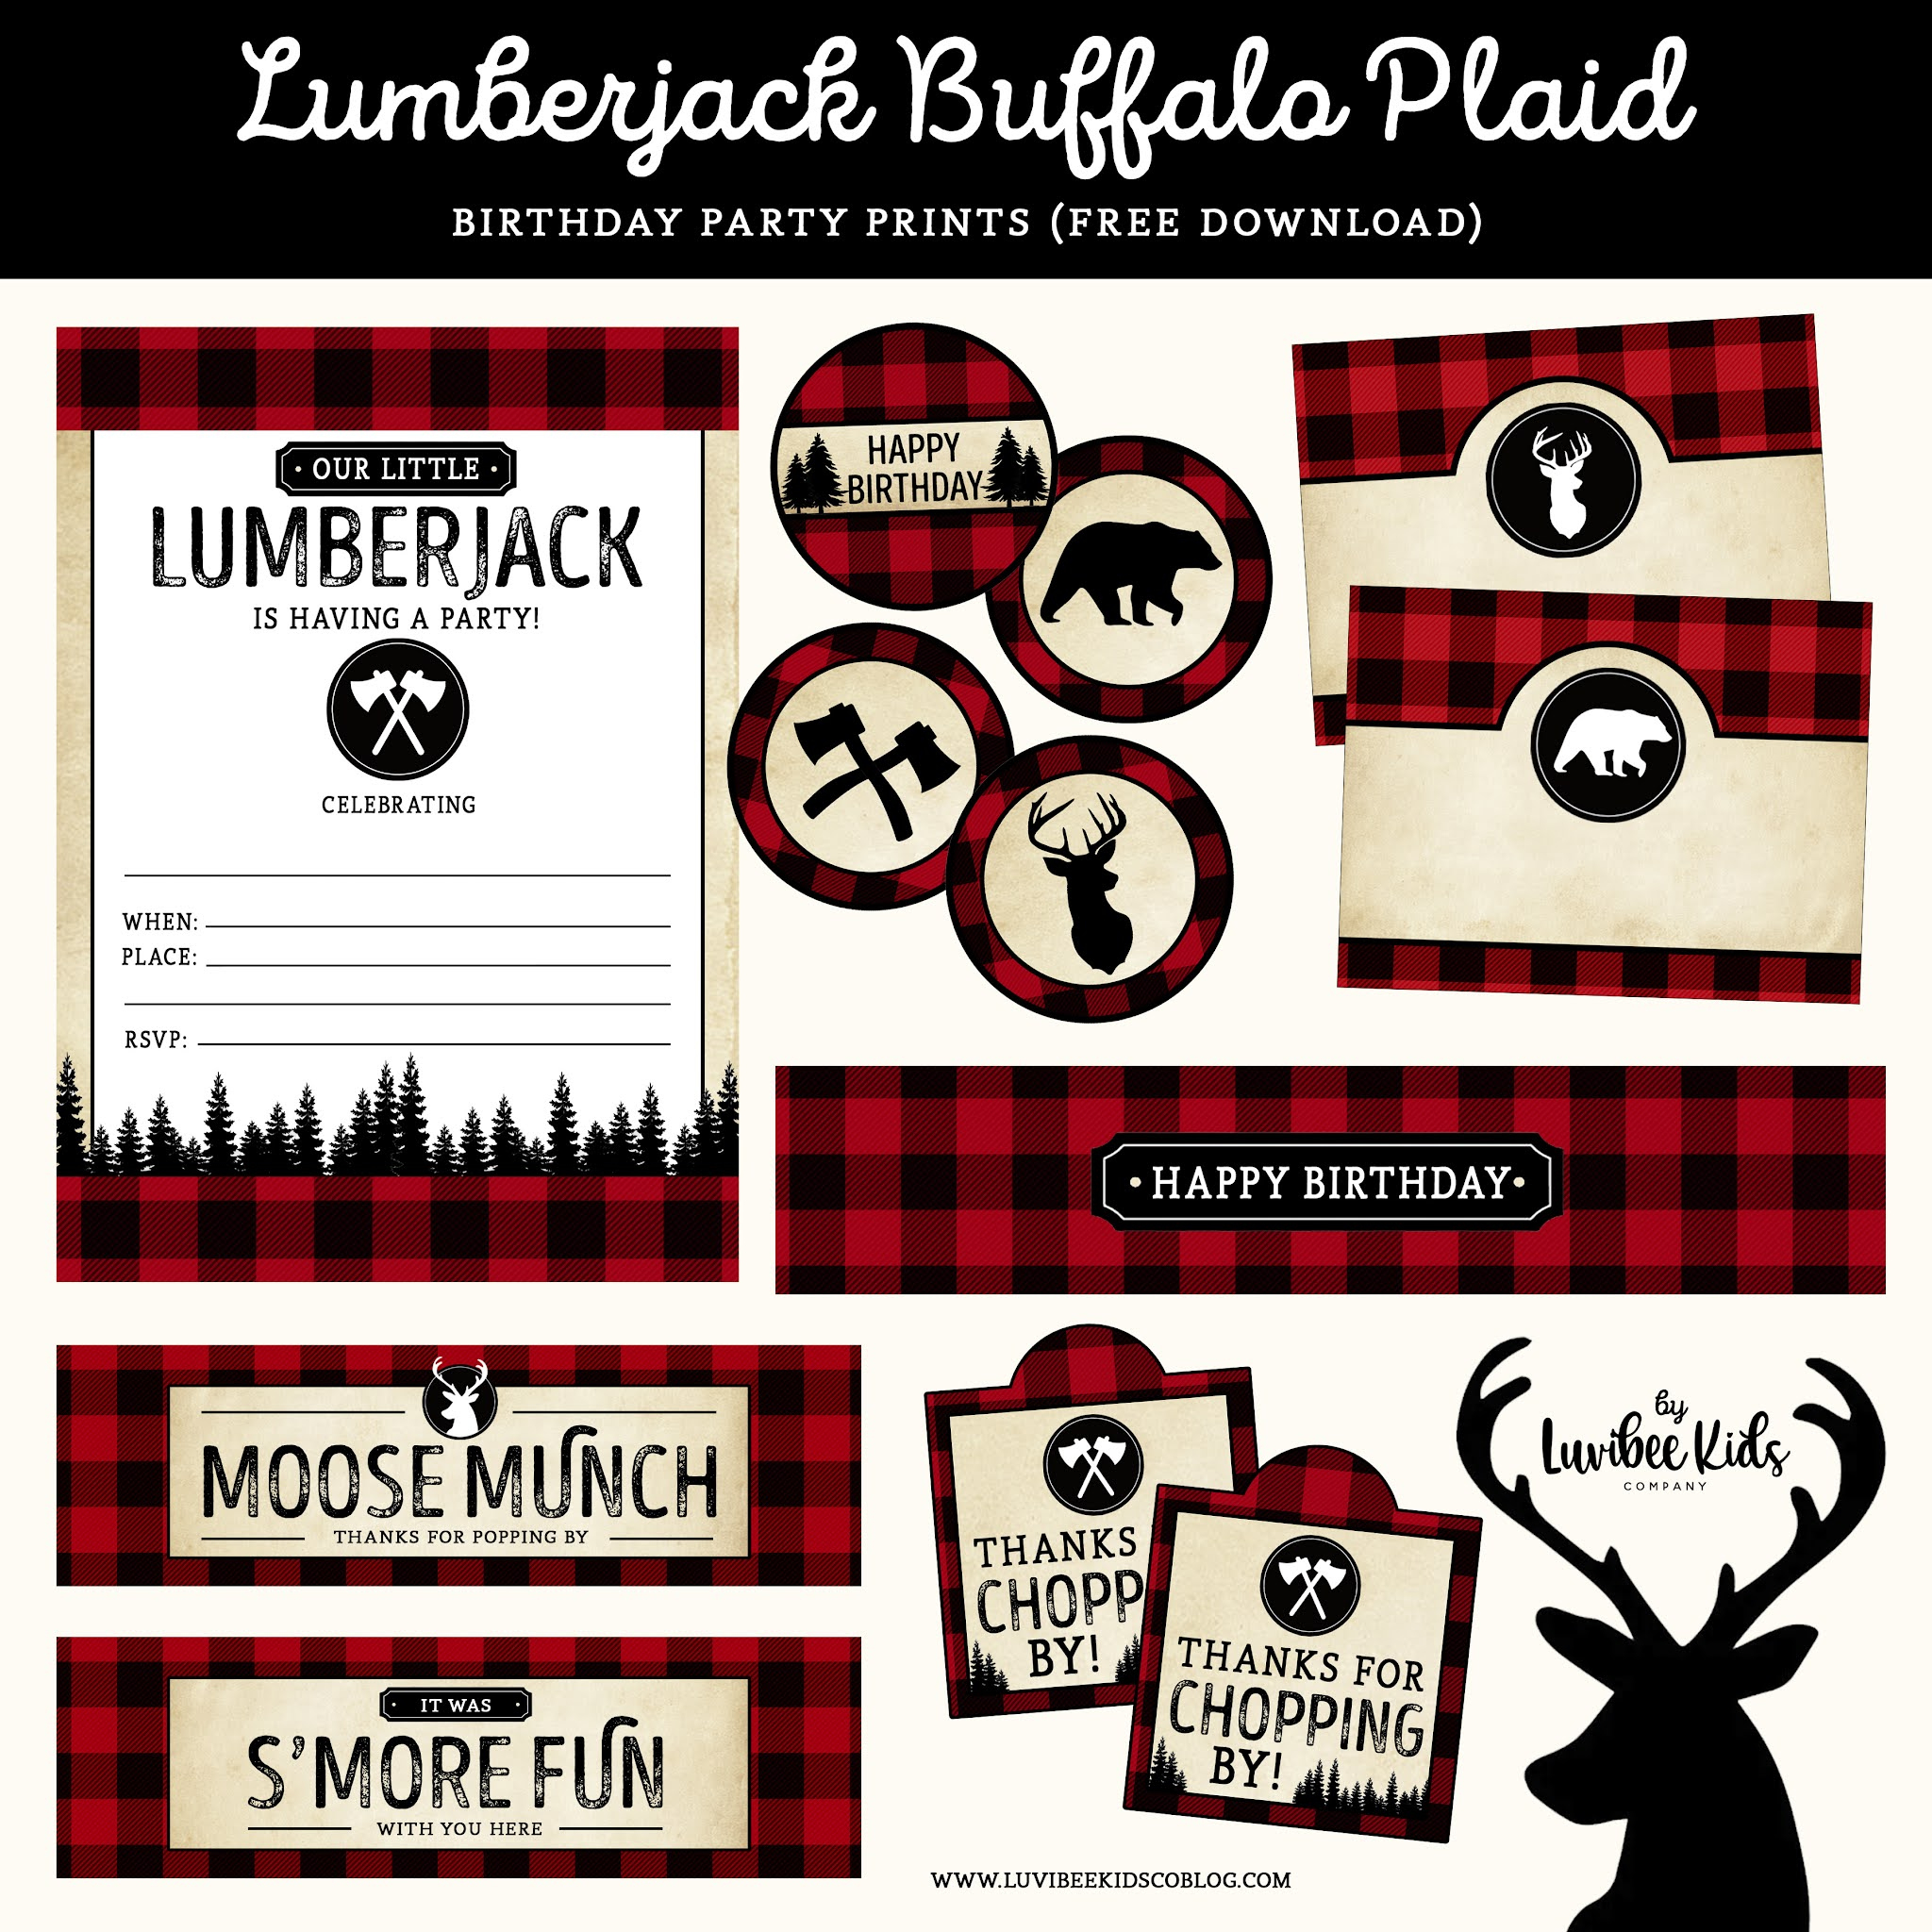 Luvibeekids Co | Blog: Lumberjack Buffalo Plaid Party Printables throughout Lumberjack Printables Free